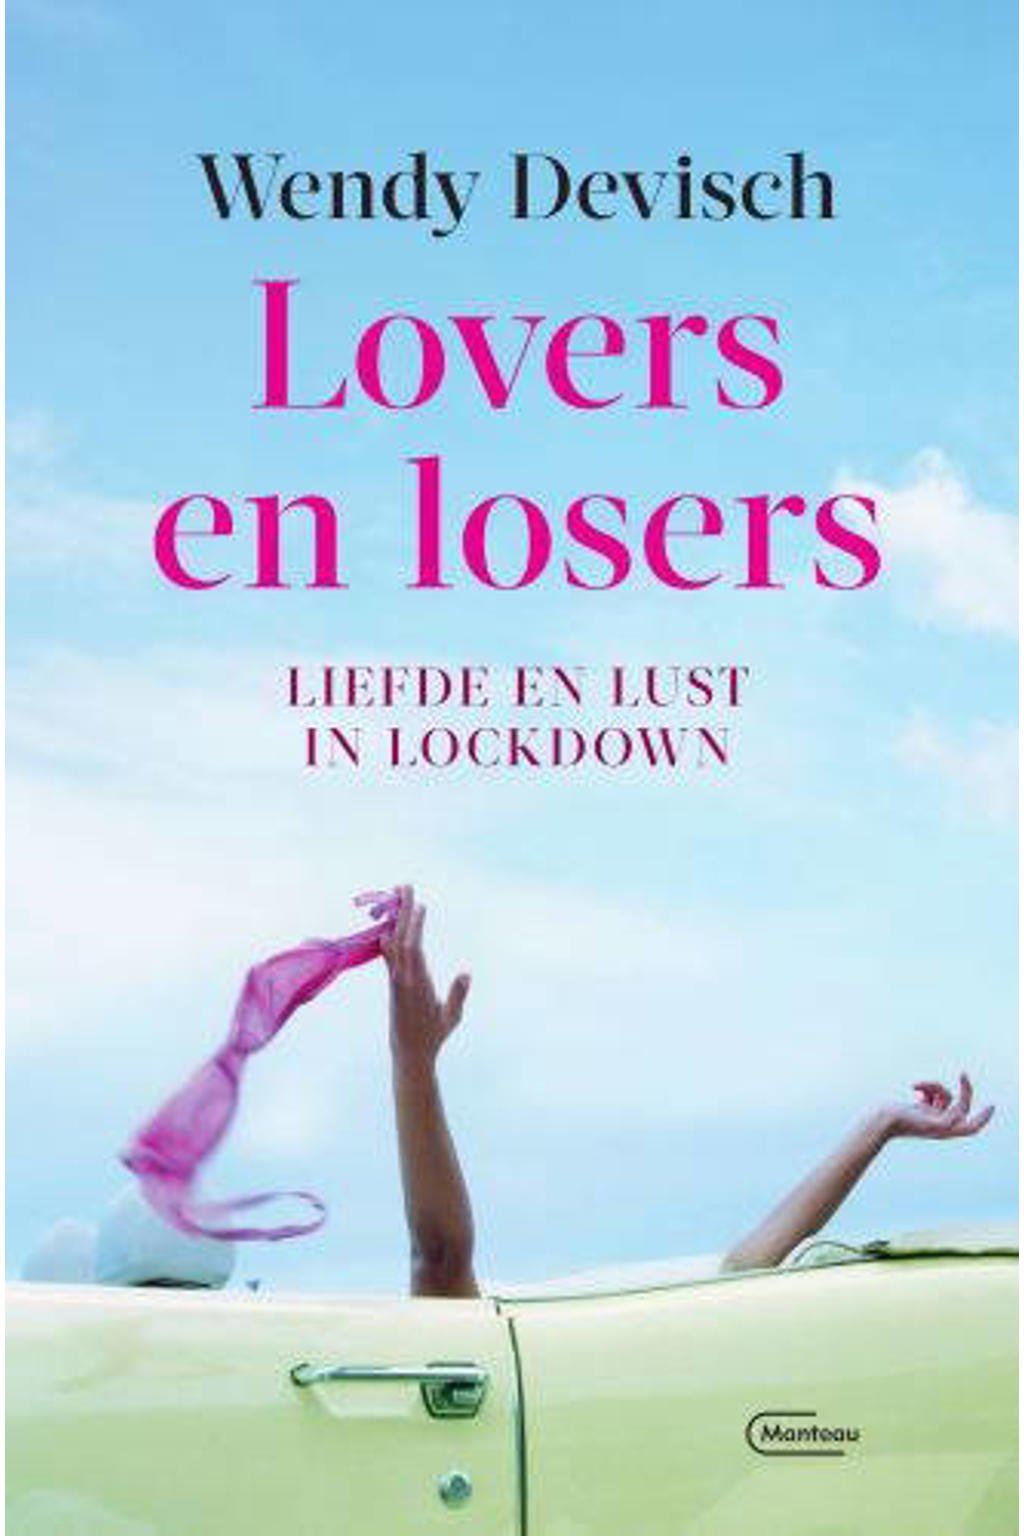 Lovers en losers - Wendy Devisch